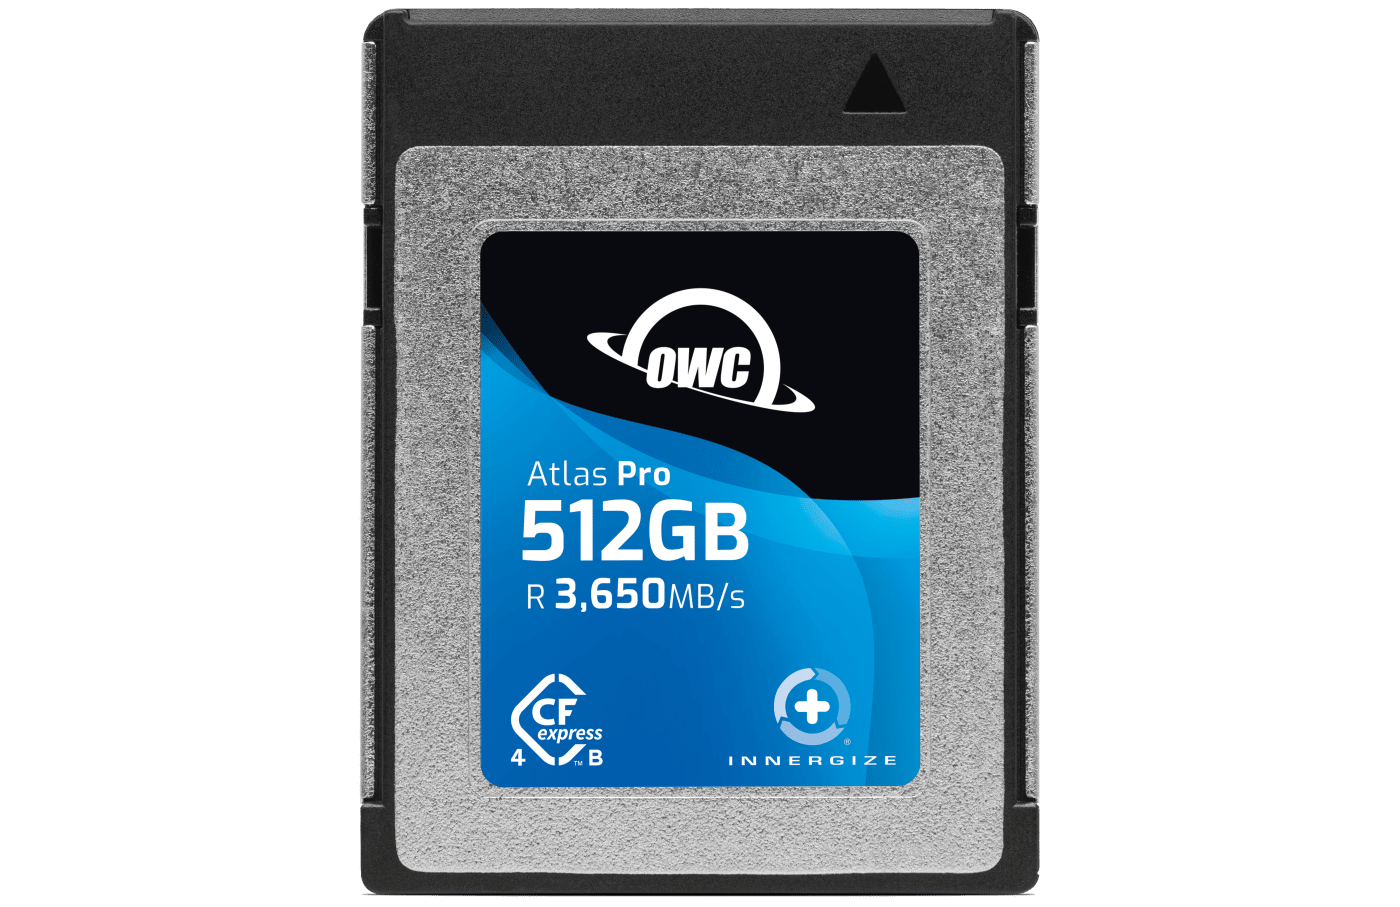 2TB OWC Atlas Pro SD Memory Card